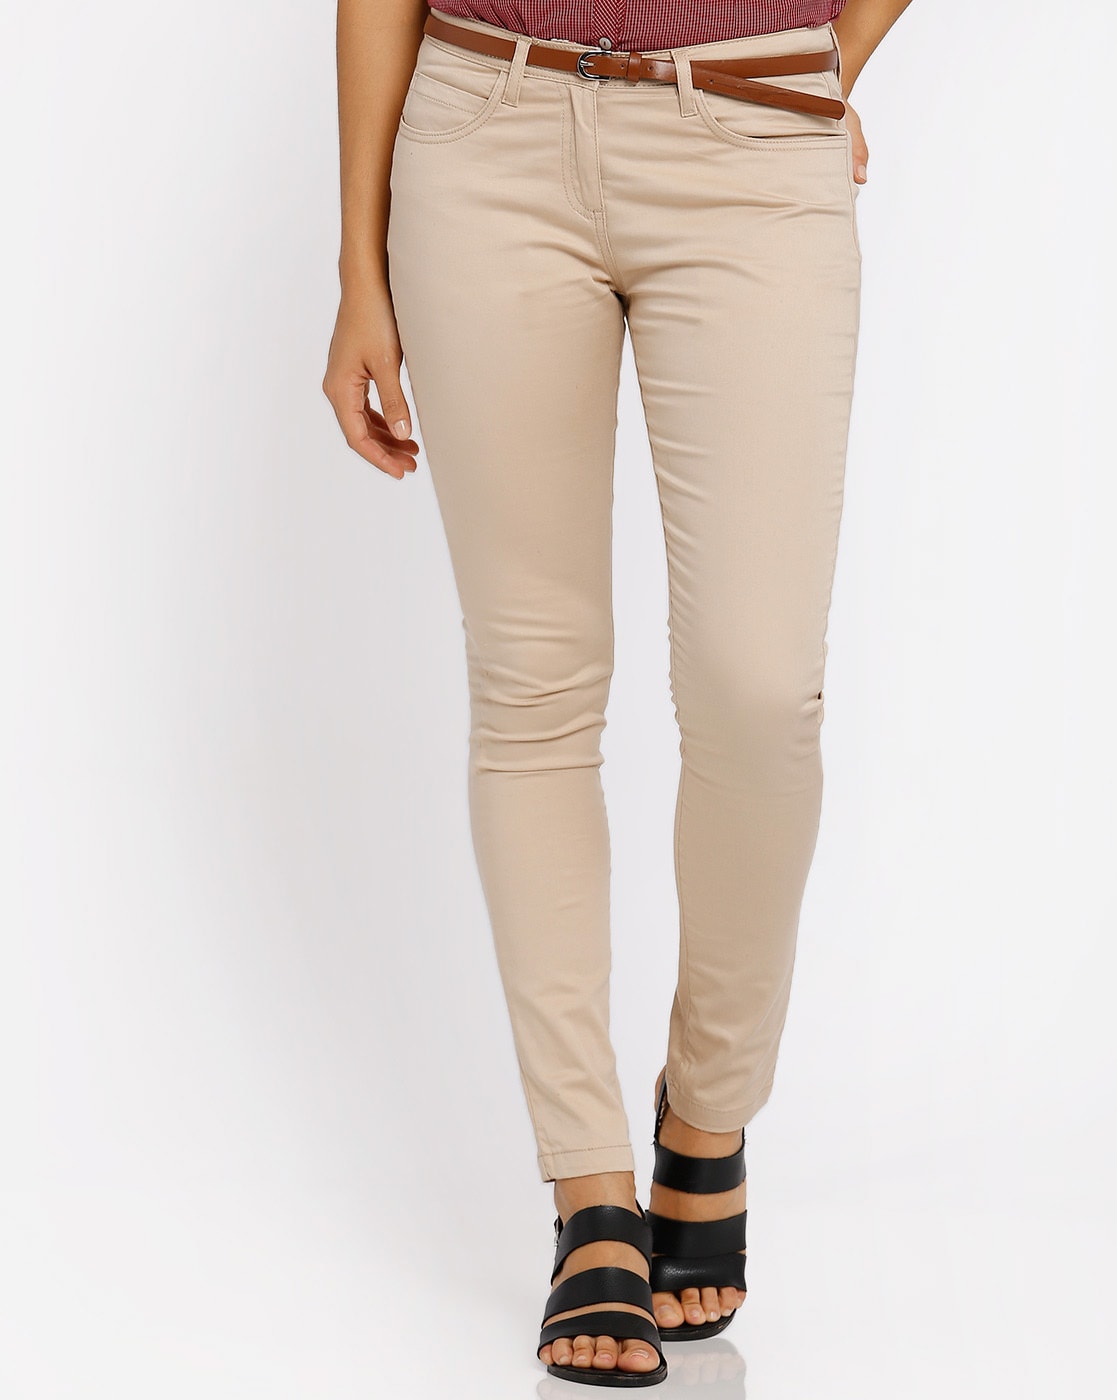 Buy Black Trousers  Pants for Women by Honey by Pantaloons Online   Ajiocom